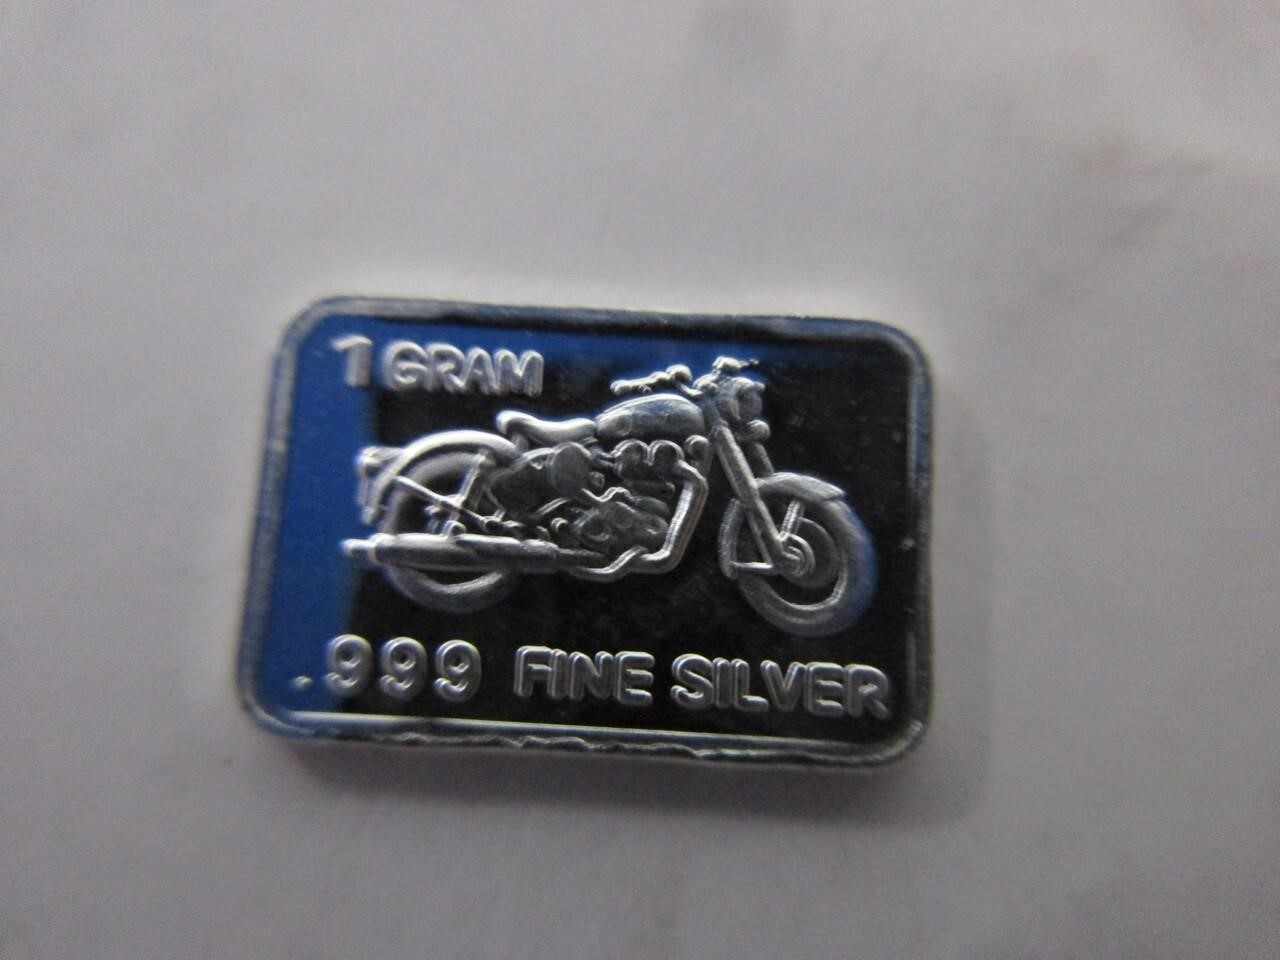 1 gram bar of .999 fine silver